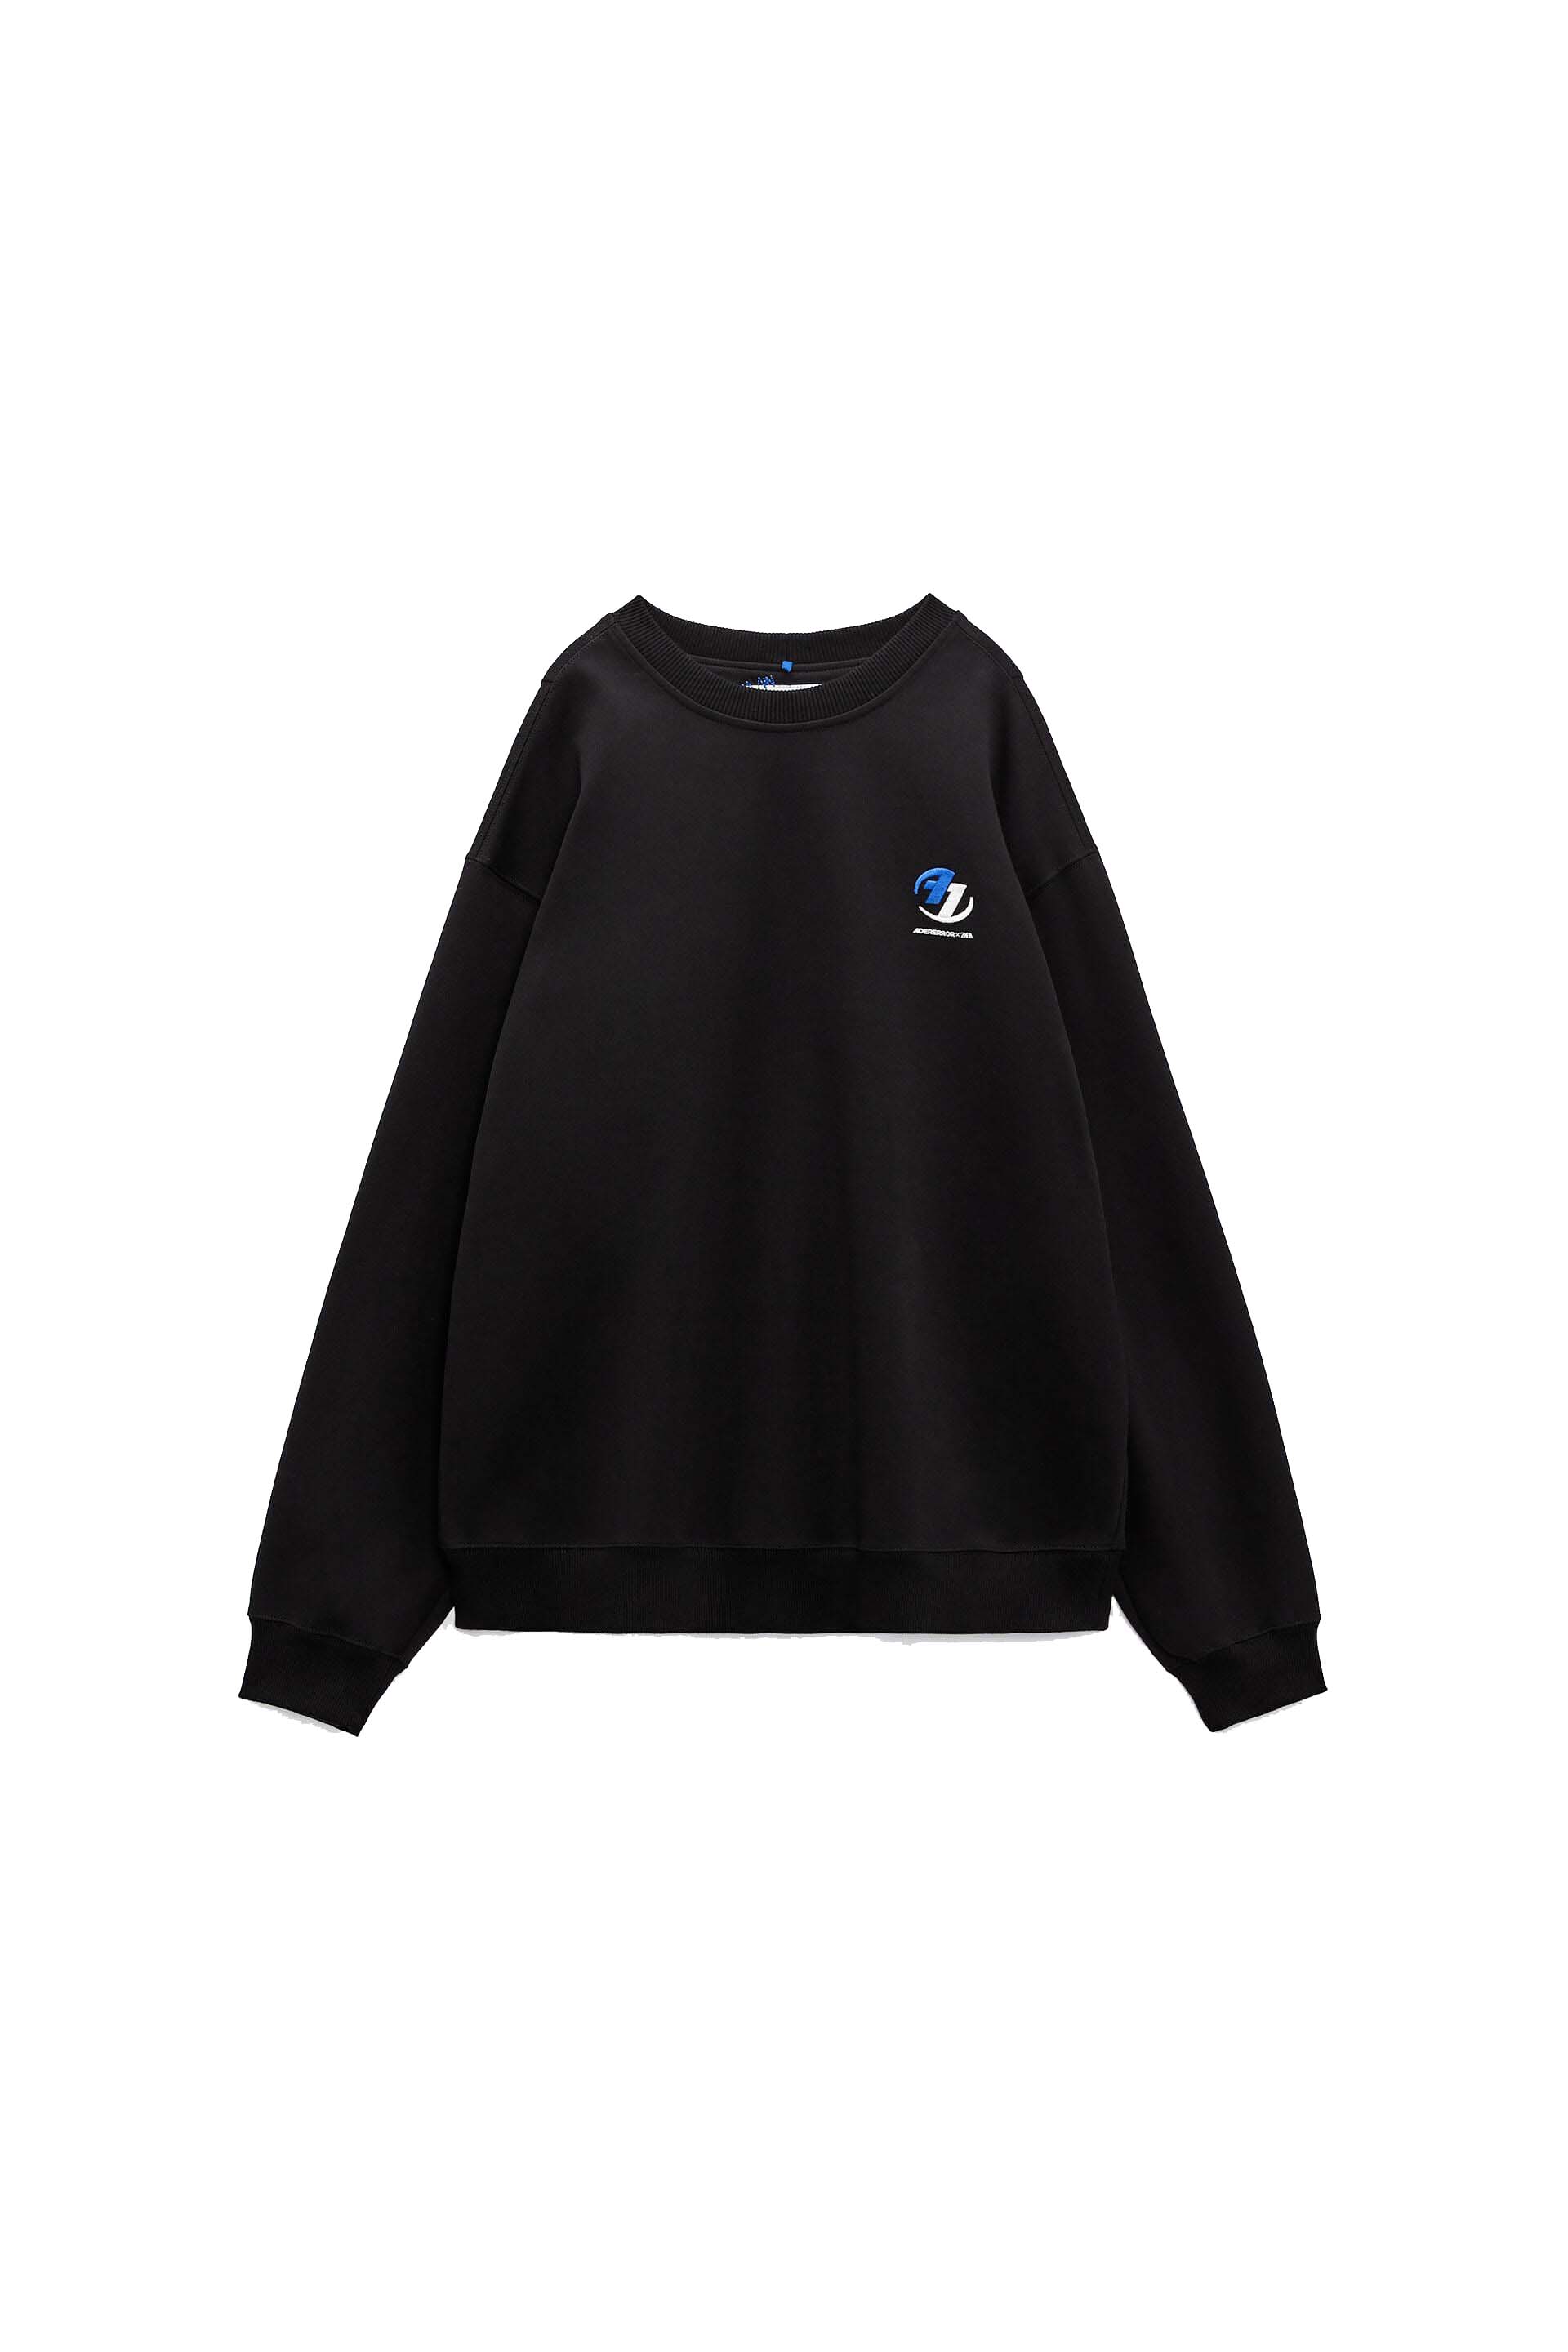 ADER error x Zara Oversized Sweatshirt Black